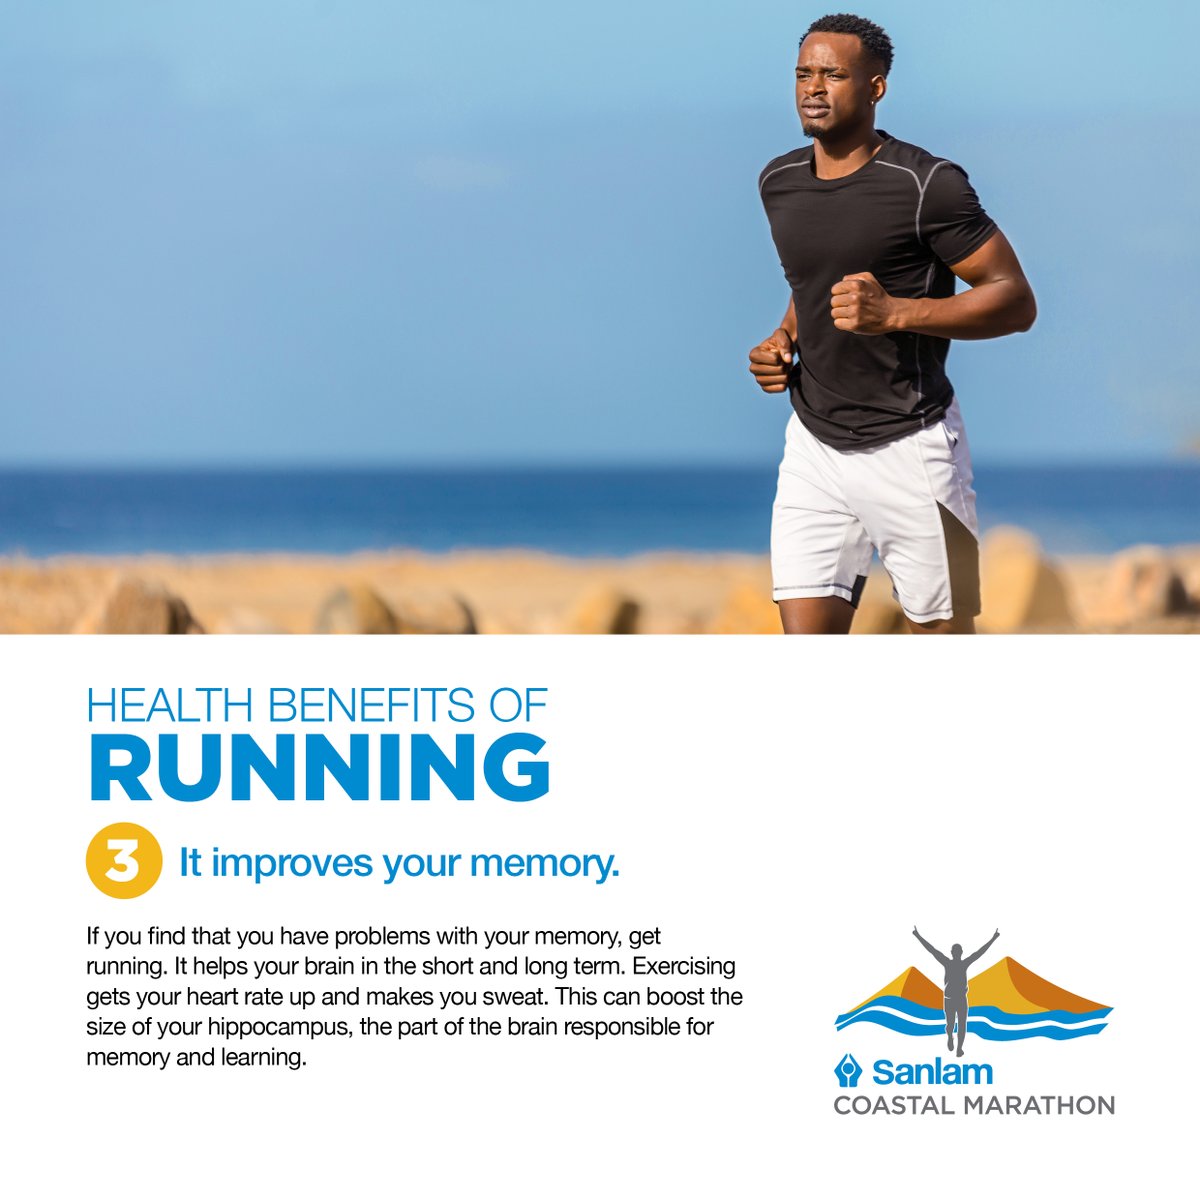 Sanlam Coastal Marathon – Health Benefits of running Health Benefit 3: Running helps boost your brain in the short and long term. So, let’s run with confidence and push the boundaries. #SanlamCoastalMarathon #pushingtheboundariesofendurance #LiveWithConfidence